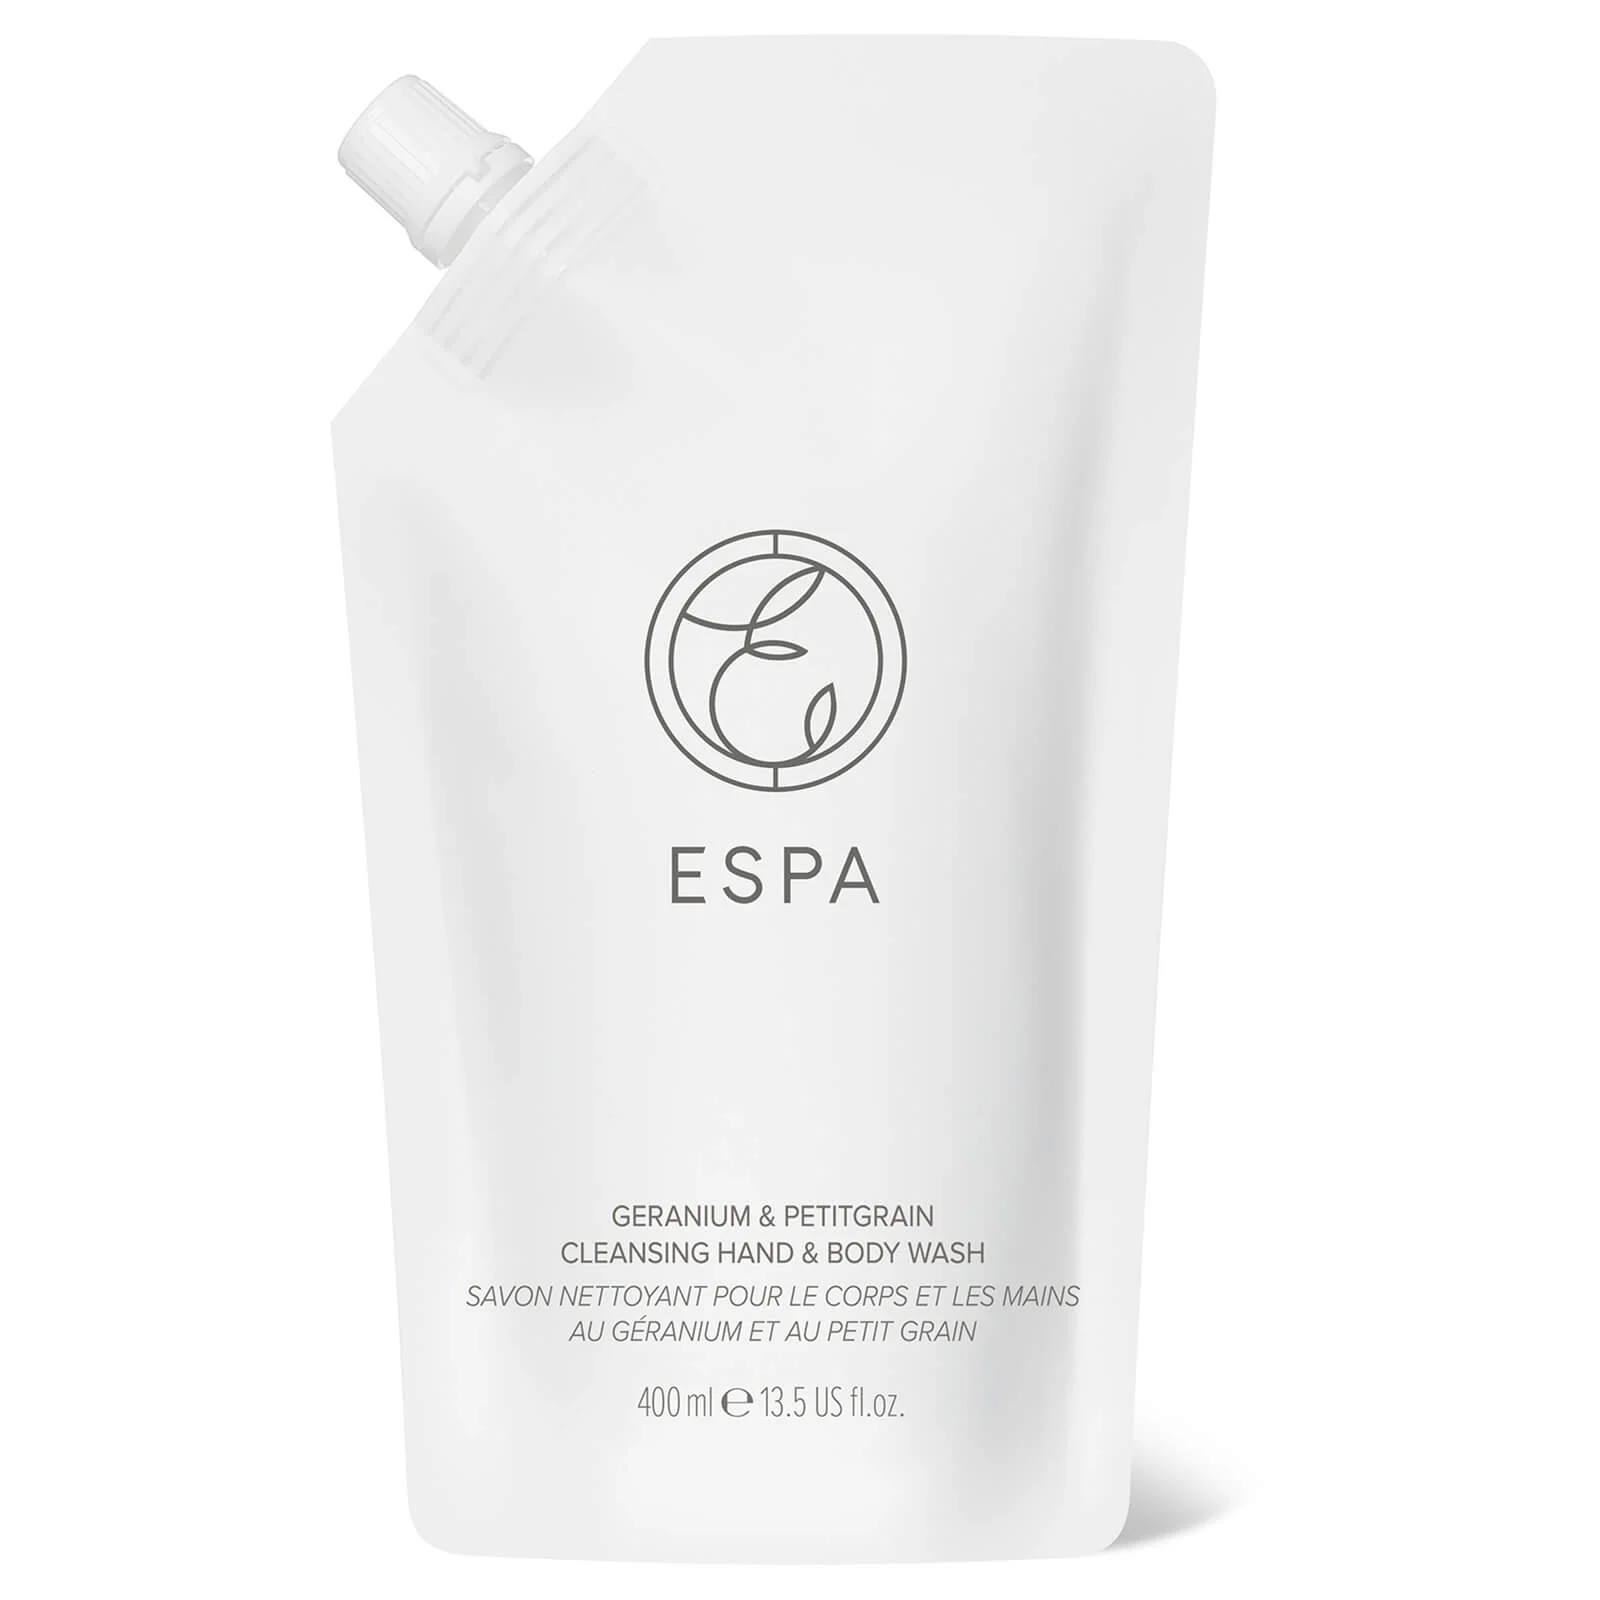 ESPA Geranium and Petitgrain Cleansing Hand and Body Wash 400ml Image 1